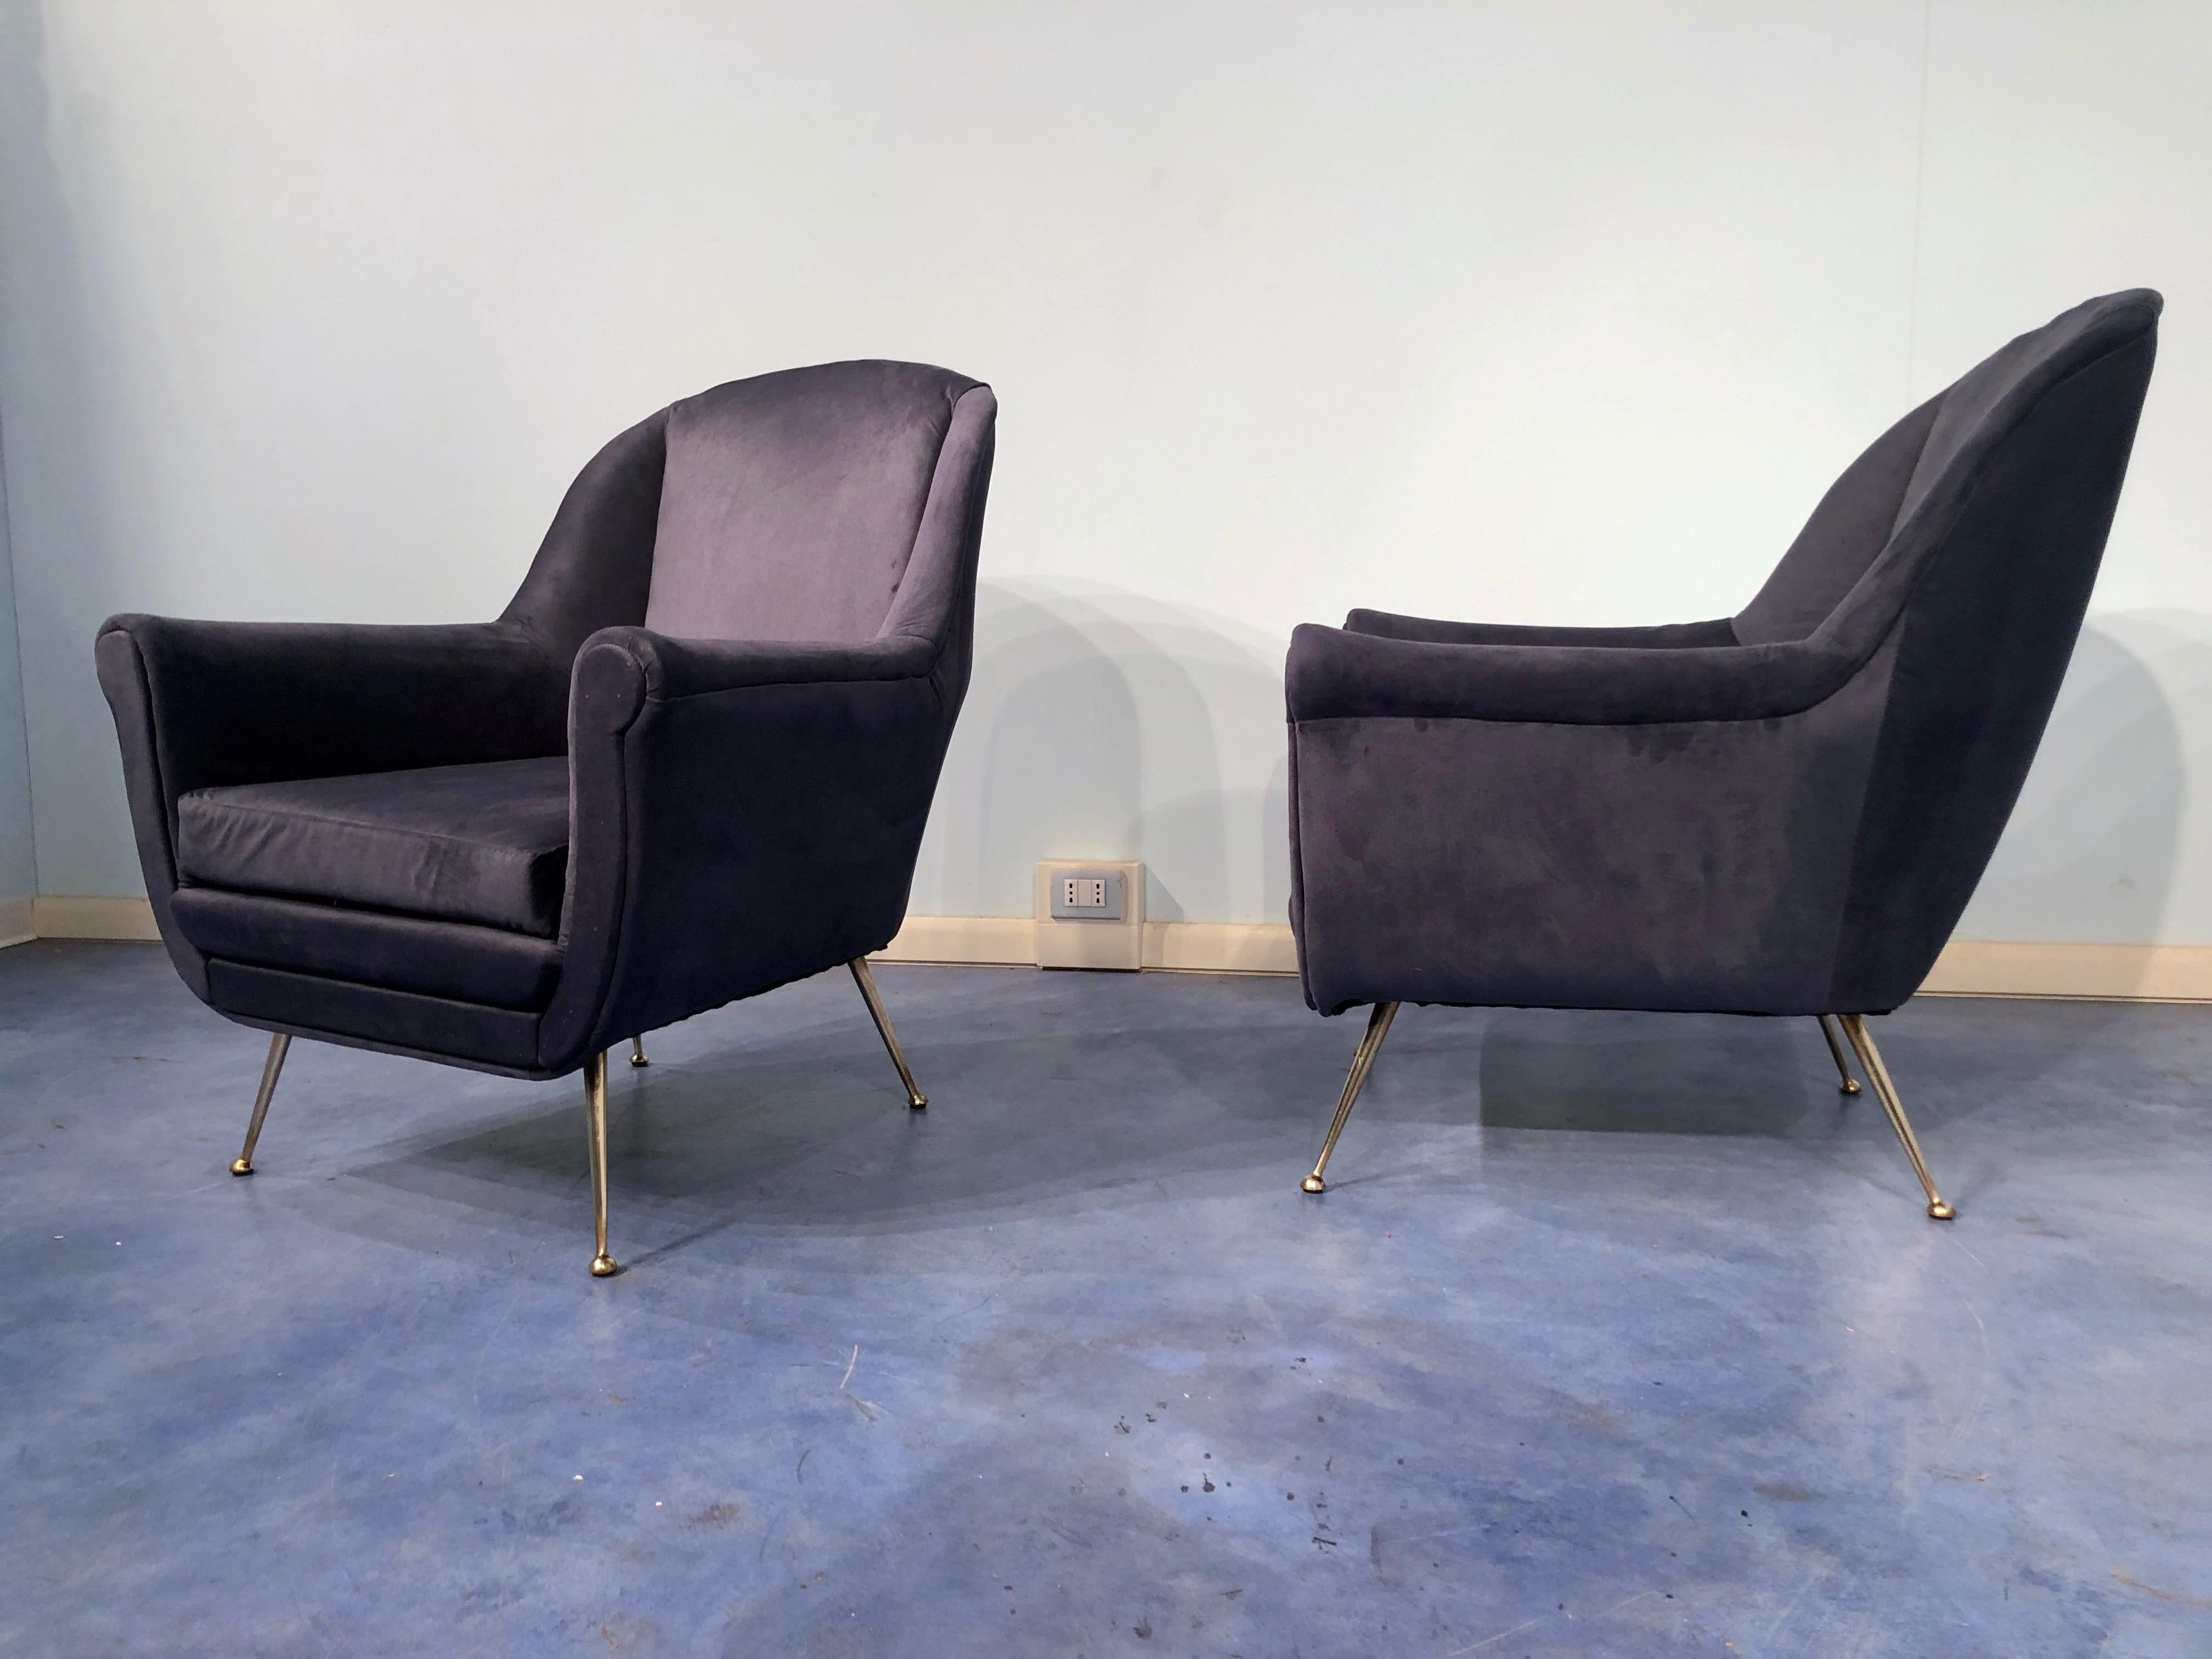 Pair of Italian Midcentury Midnight Blue Velvet Armchairs, Gio Ponti Style 1950s For Sale 5